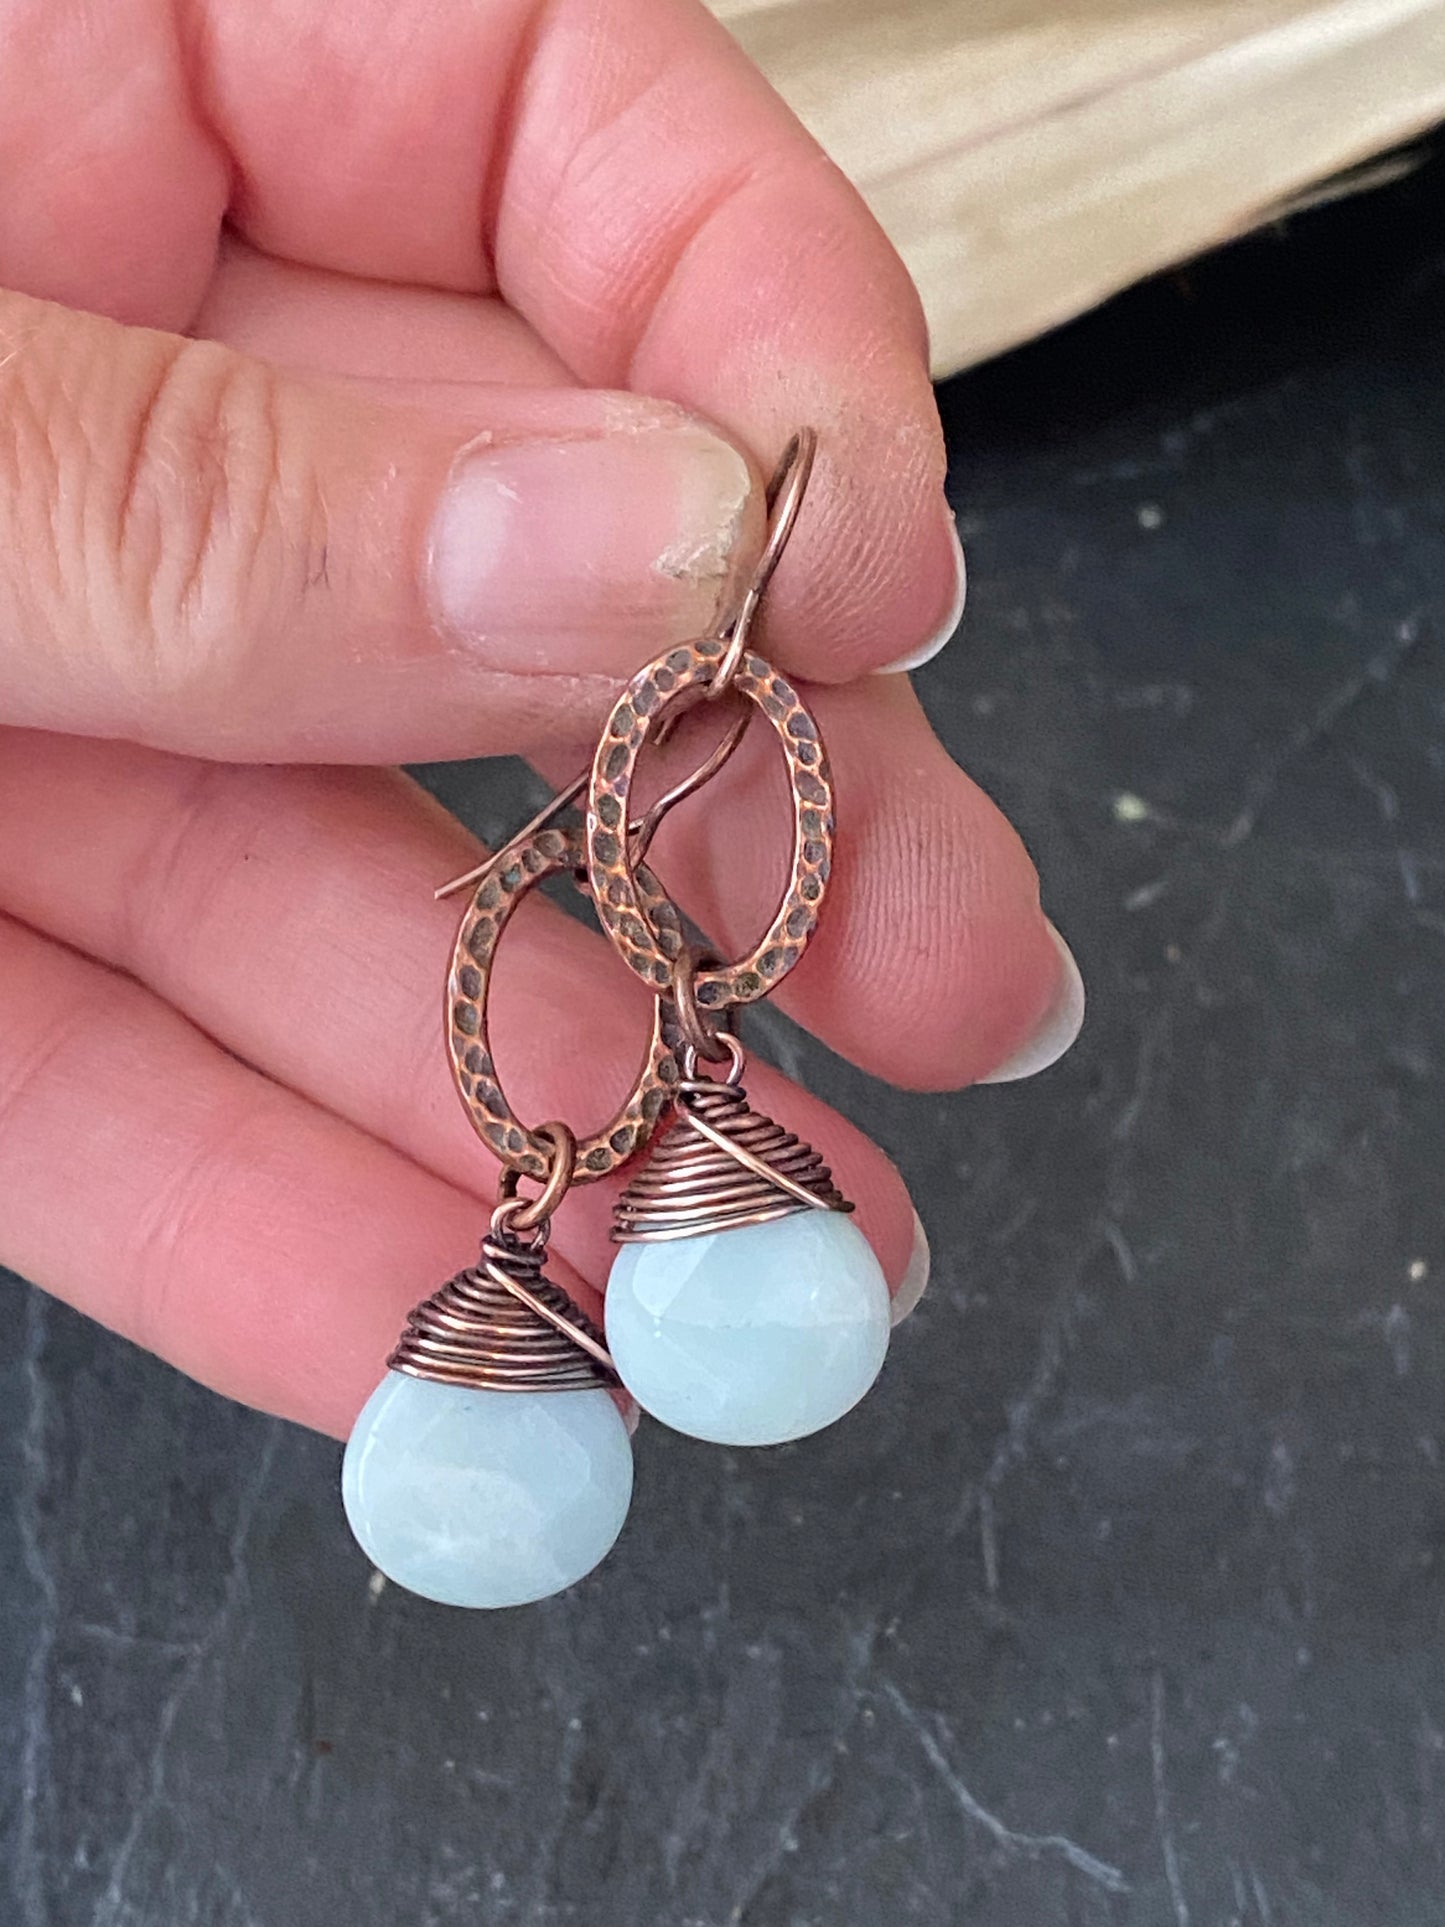 Amazonite gemstone drops, copper hammered metal charm, earrings, jewelry.